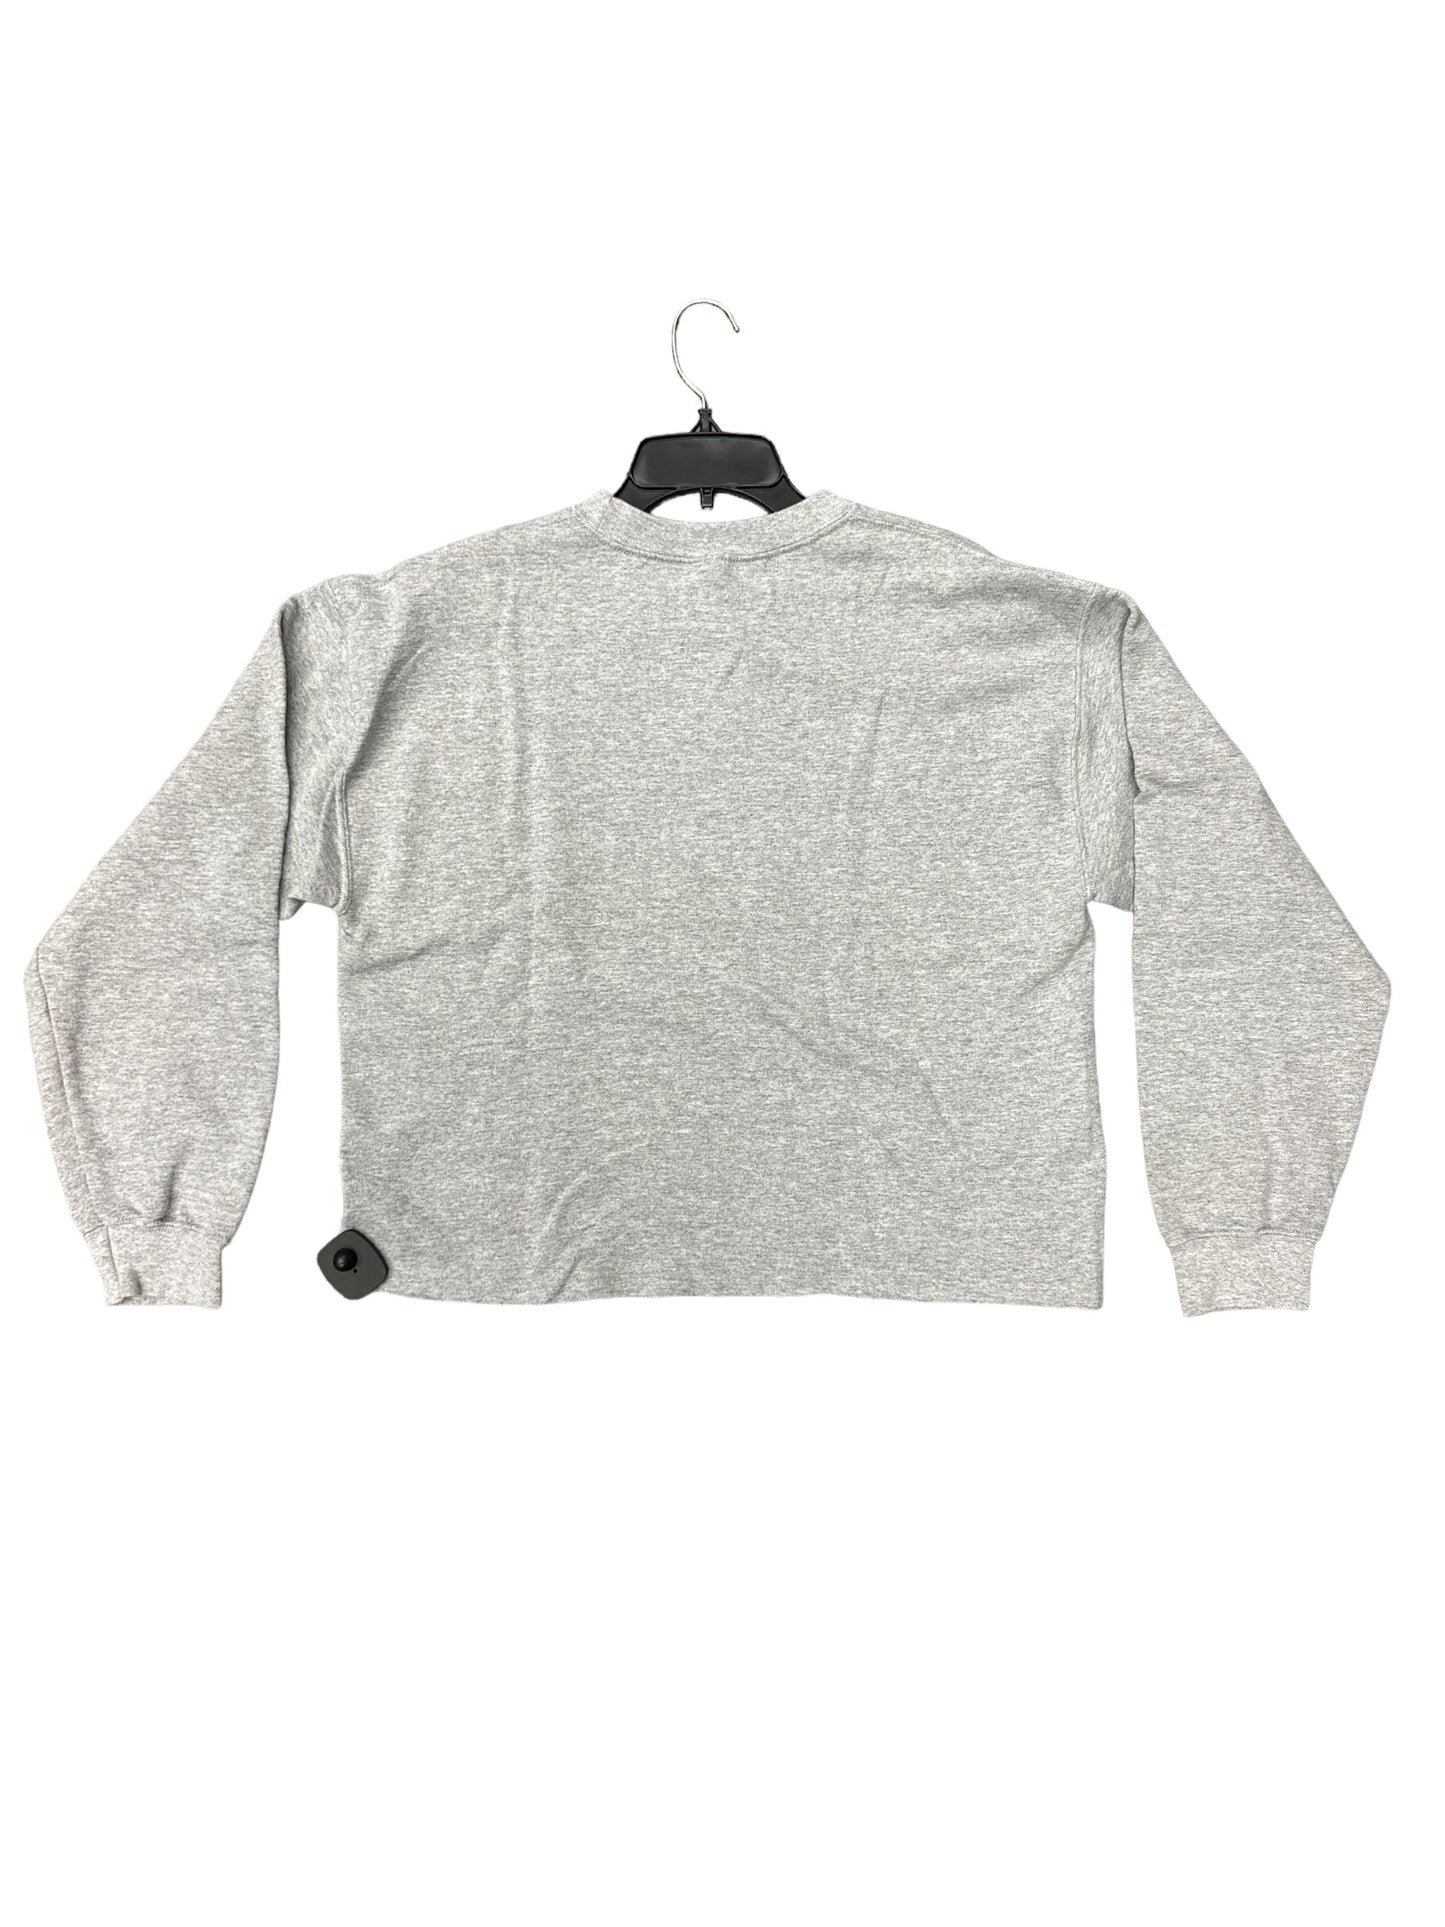 Sweatshirt Crewneck By Gildan  Size: M